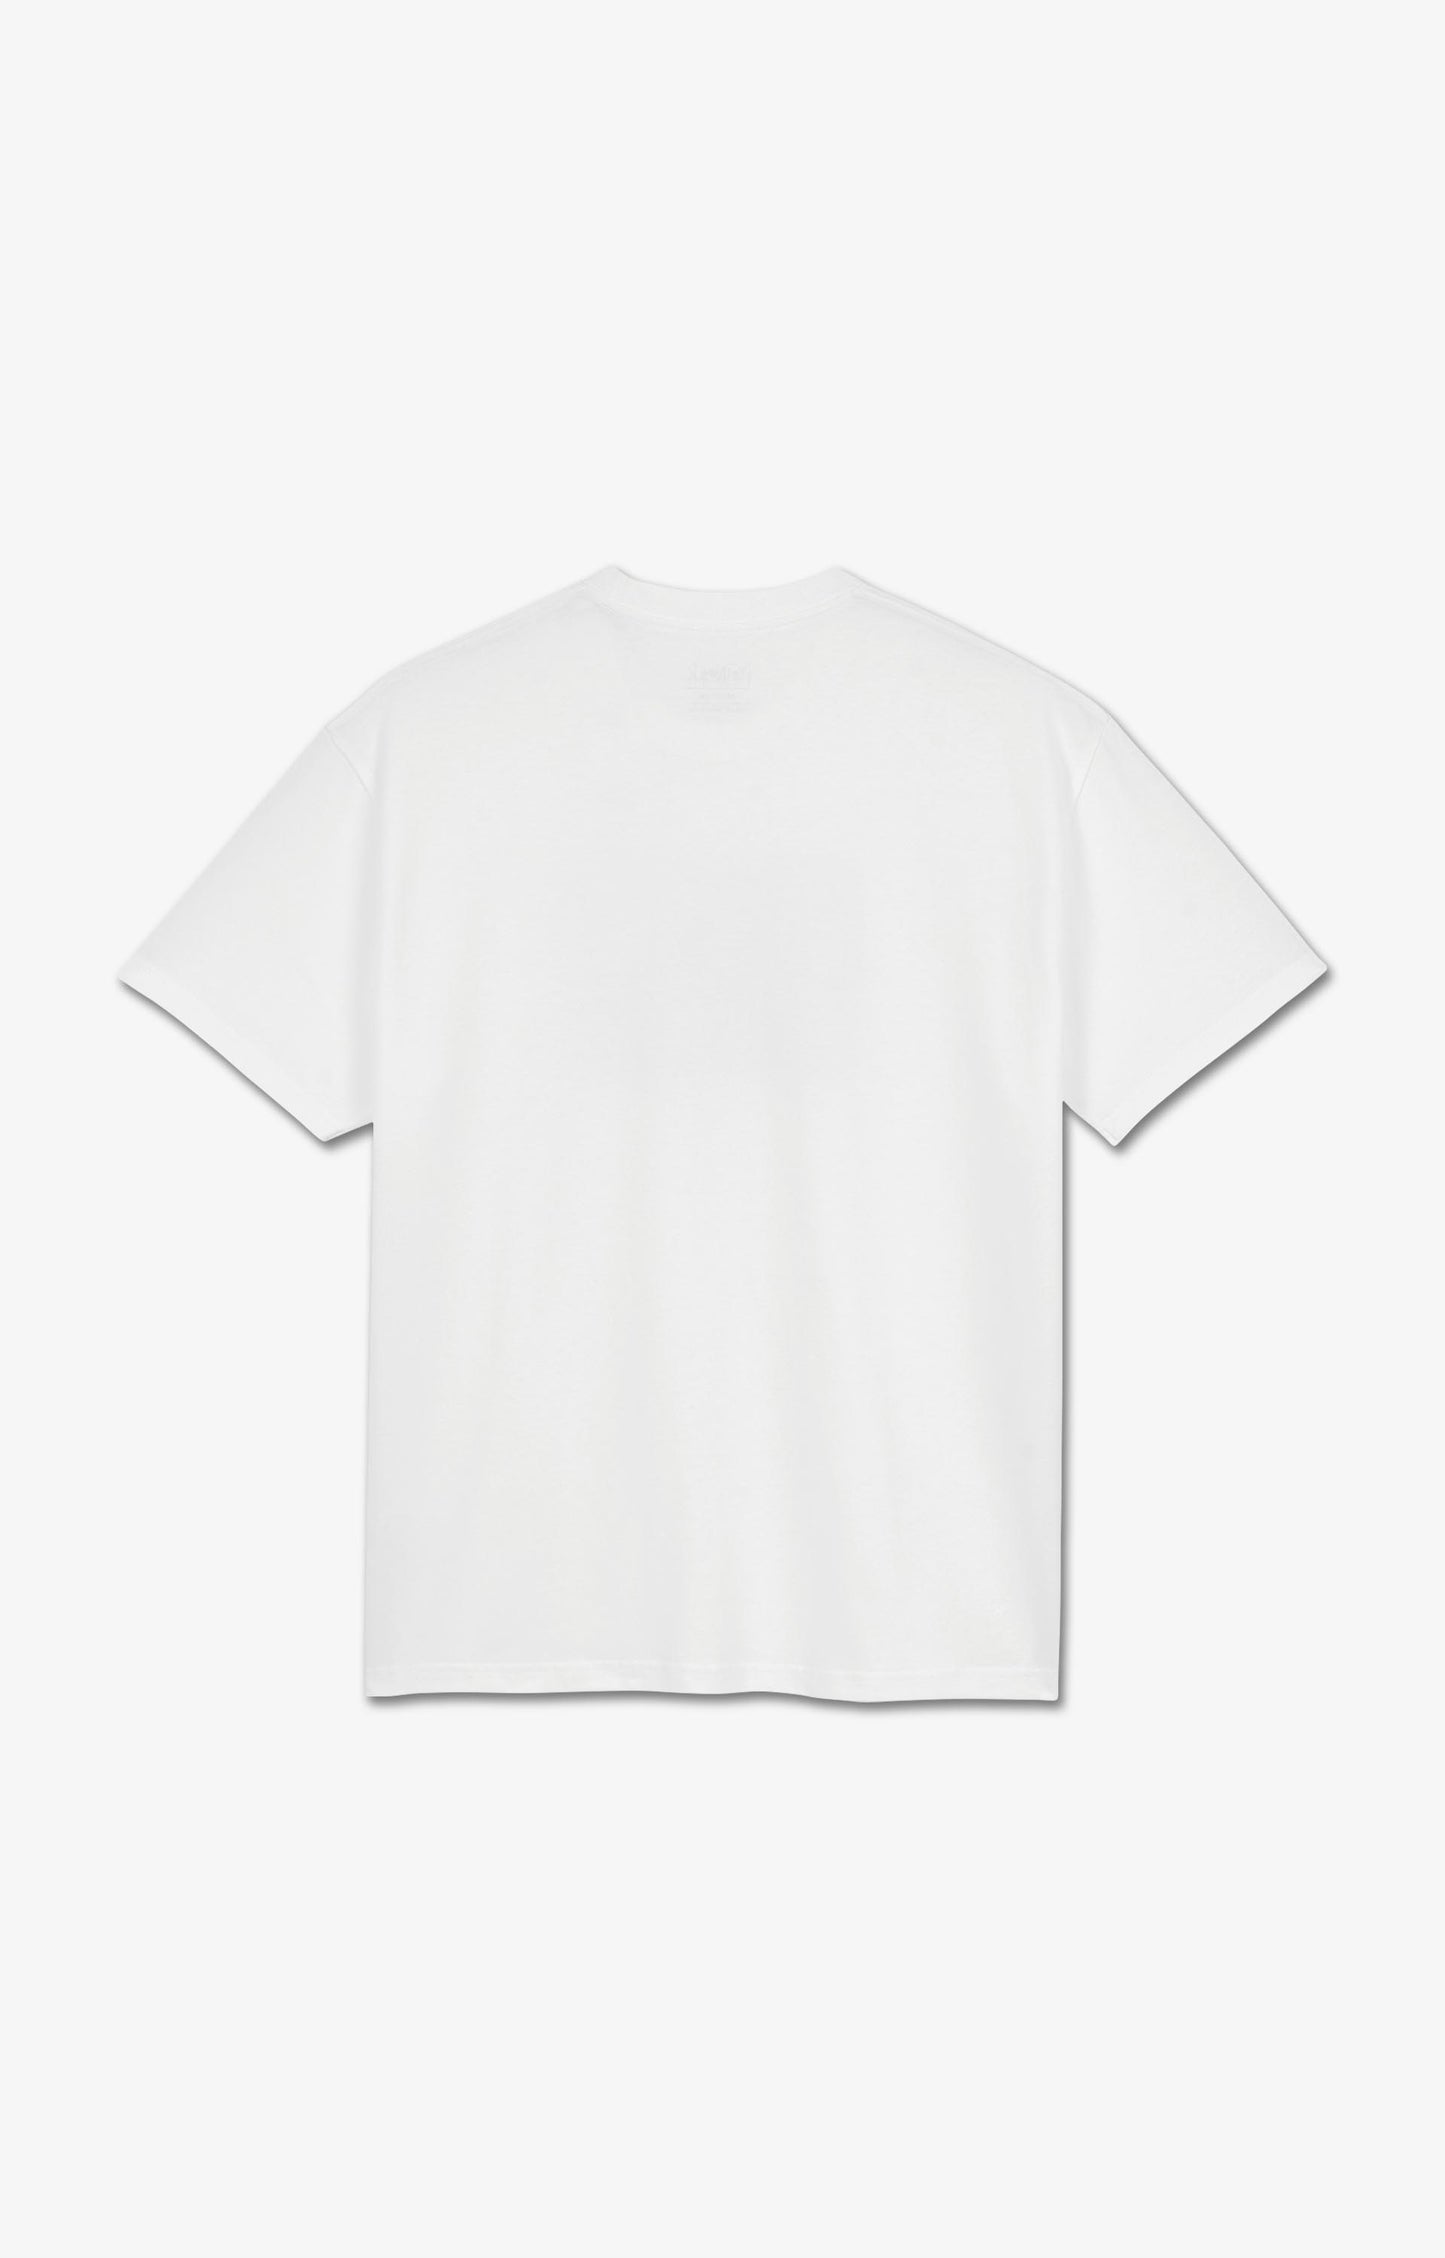 Polar Skate Co Texas T-Shirt, White